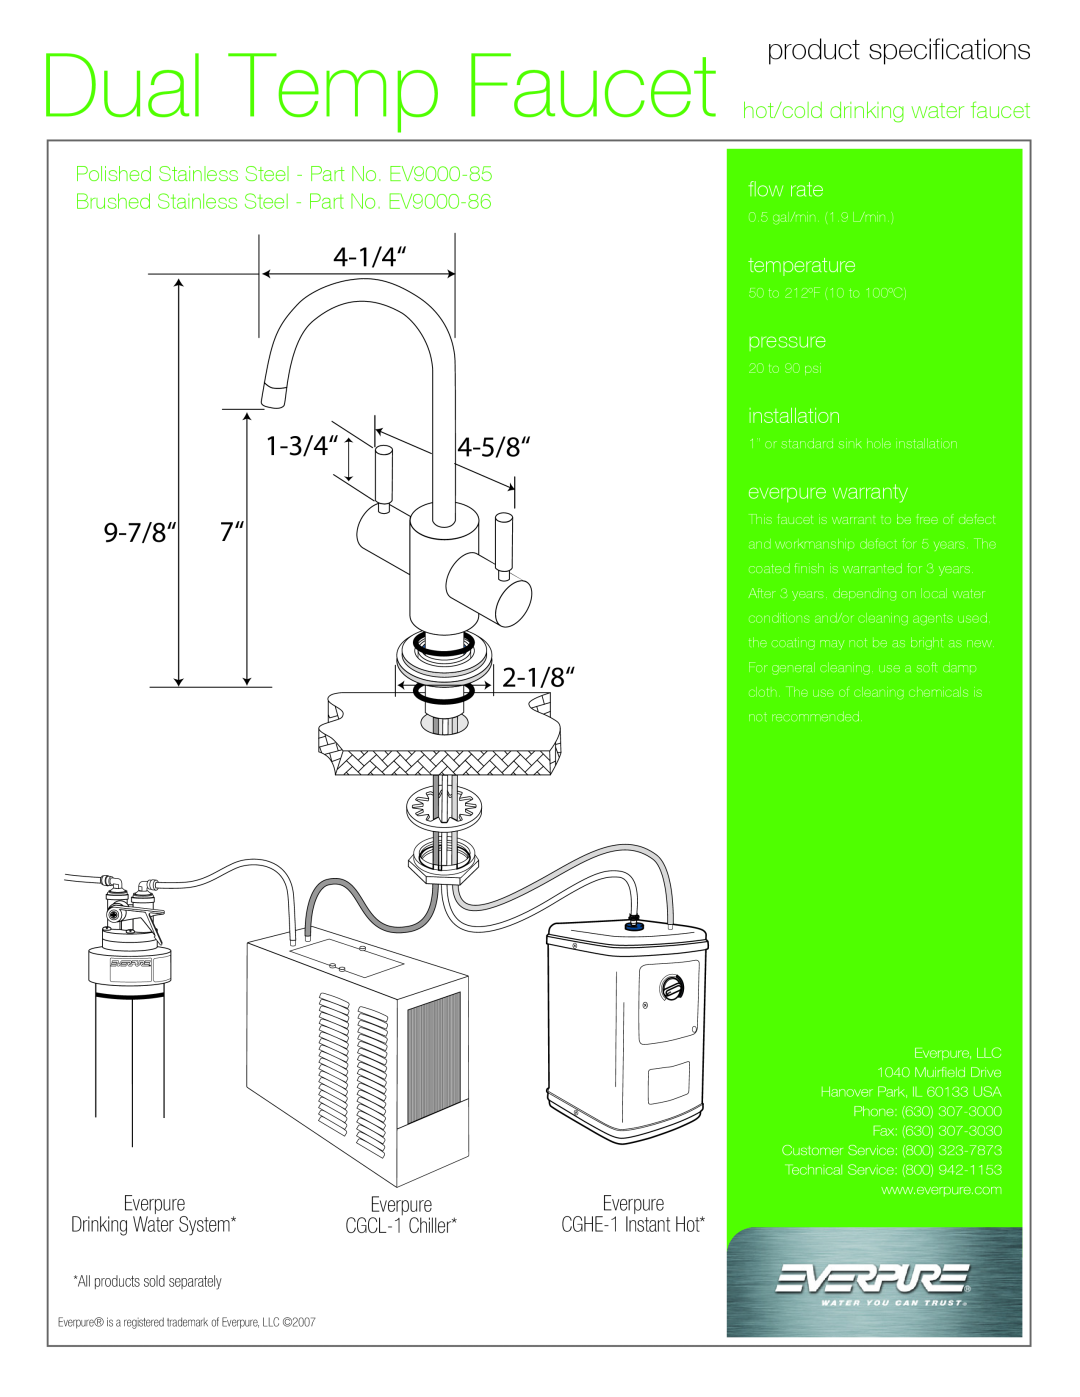 Everpure Dual Temp Faucet 4-1/4“, 9-7/8“, 1-3/4“, 4-5/8“ 2-1/8“, product specifications, flow rate, temperature, pressure 